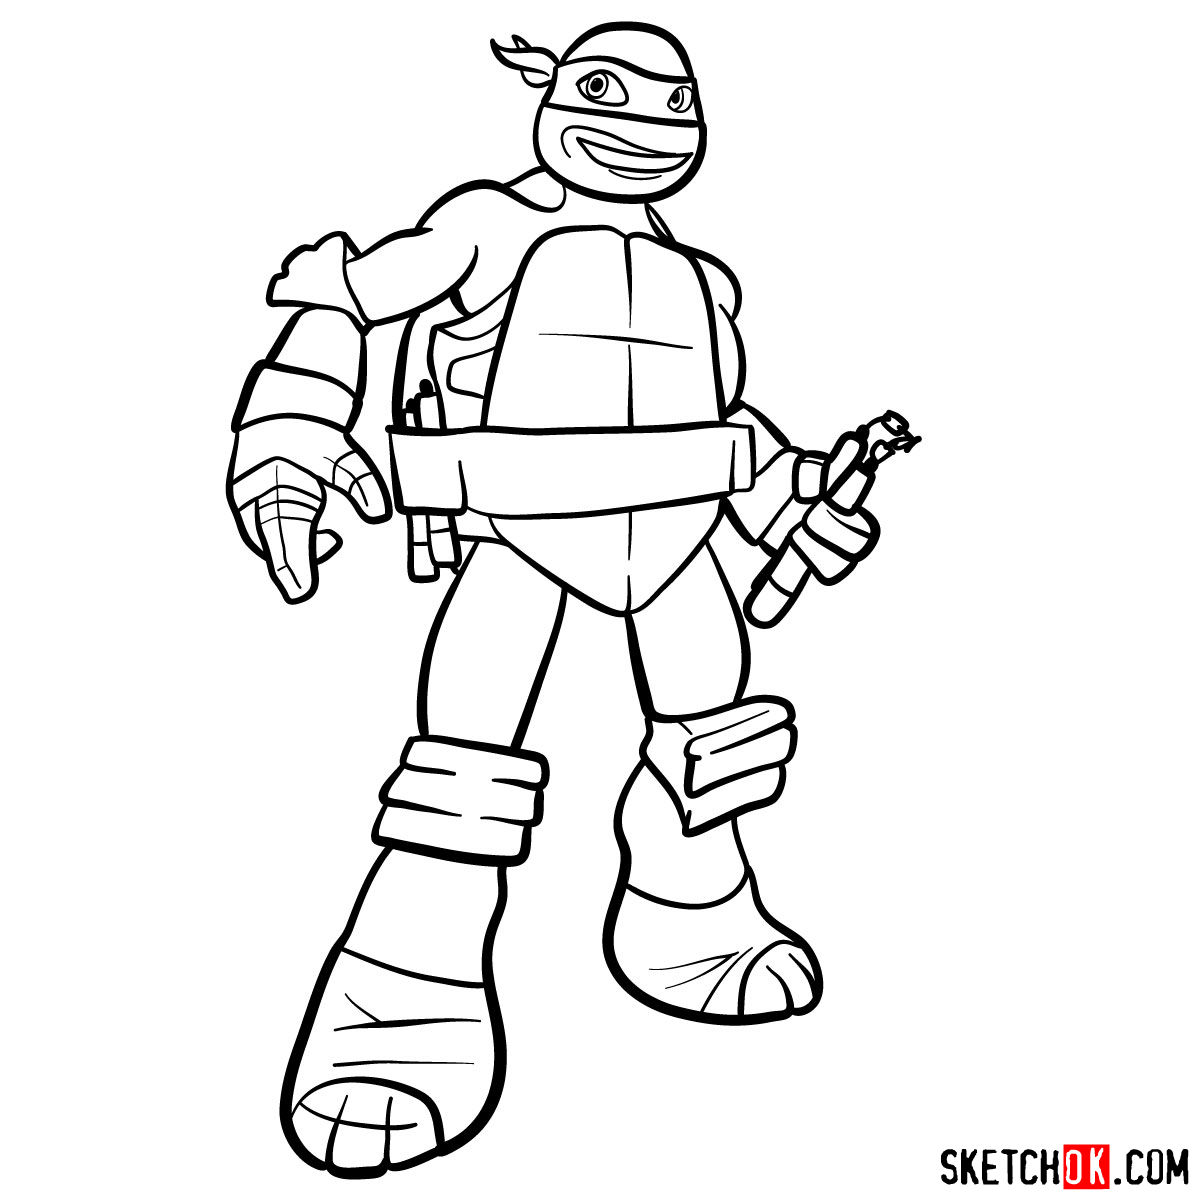 How to draw Michaelangelo ninja turtle cartoon style